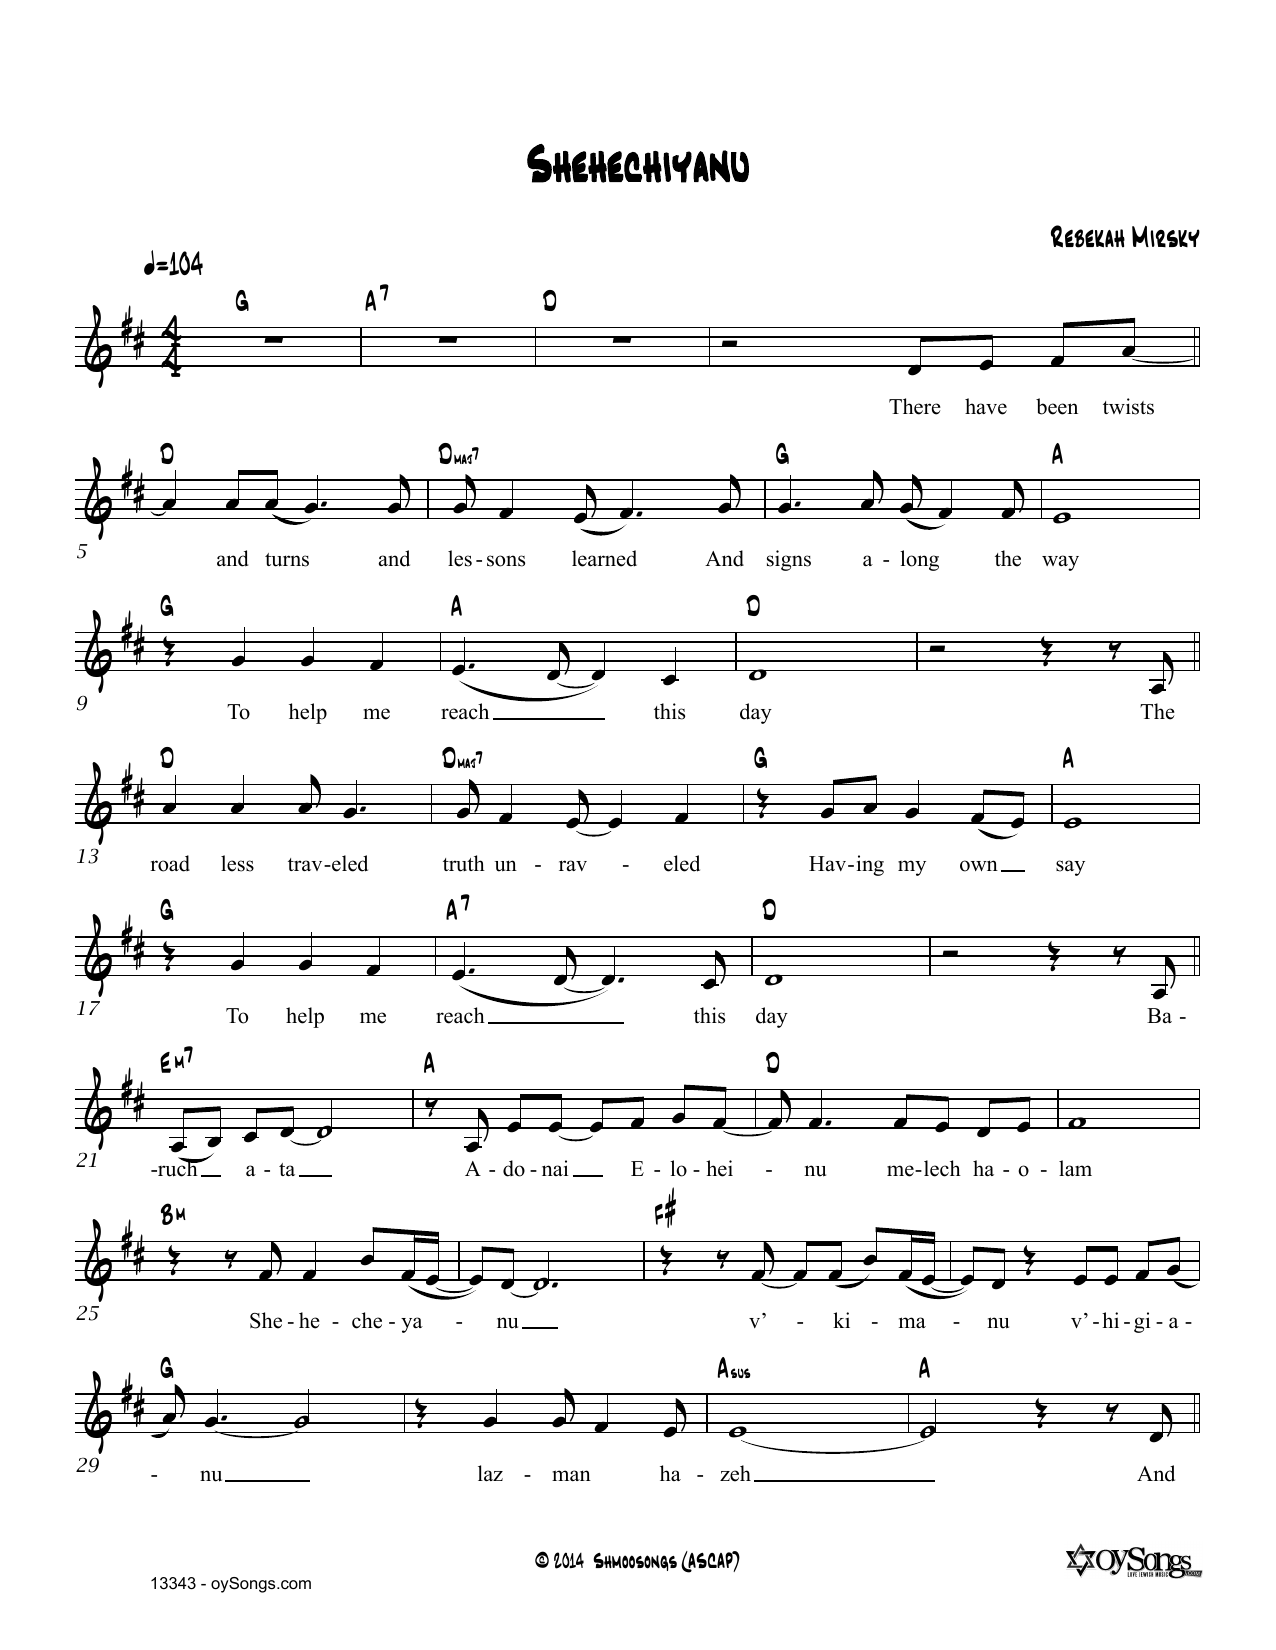 Rebecca Mirsky Shehechiyanu Sheet Music Notes & Chords for Real Book – Melody, Lyrics & Chords - Download or Print PDF